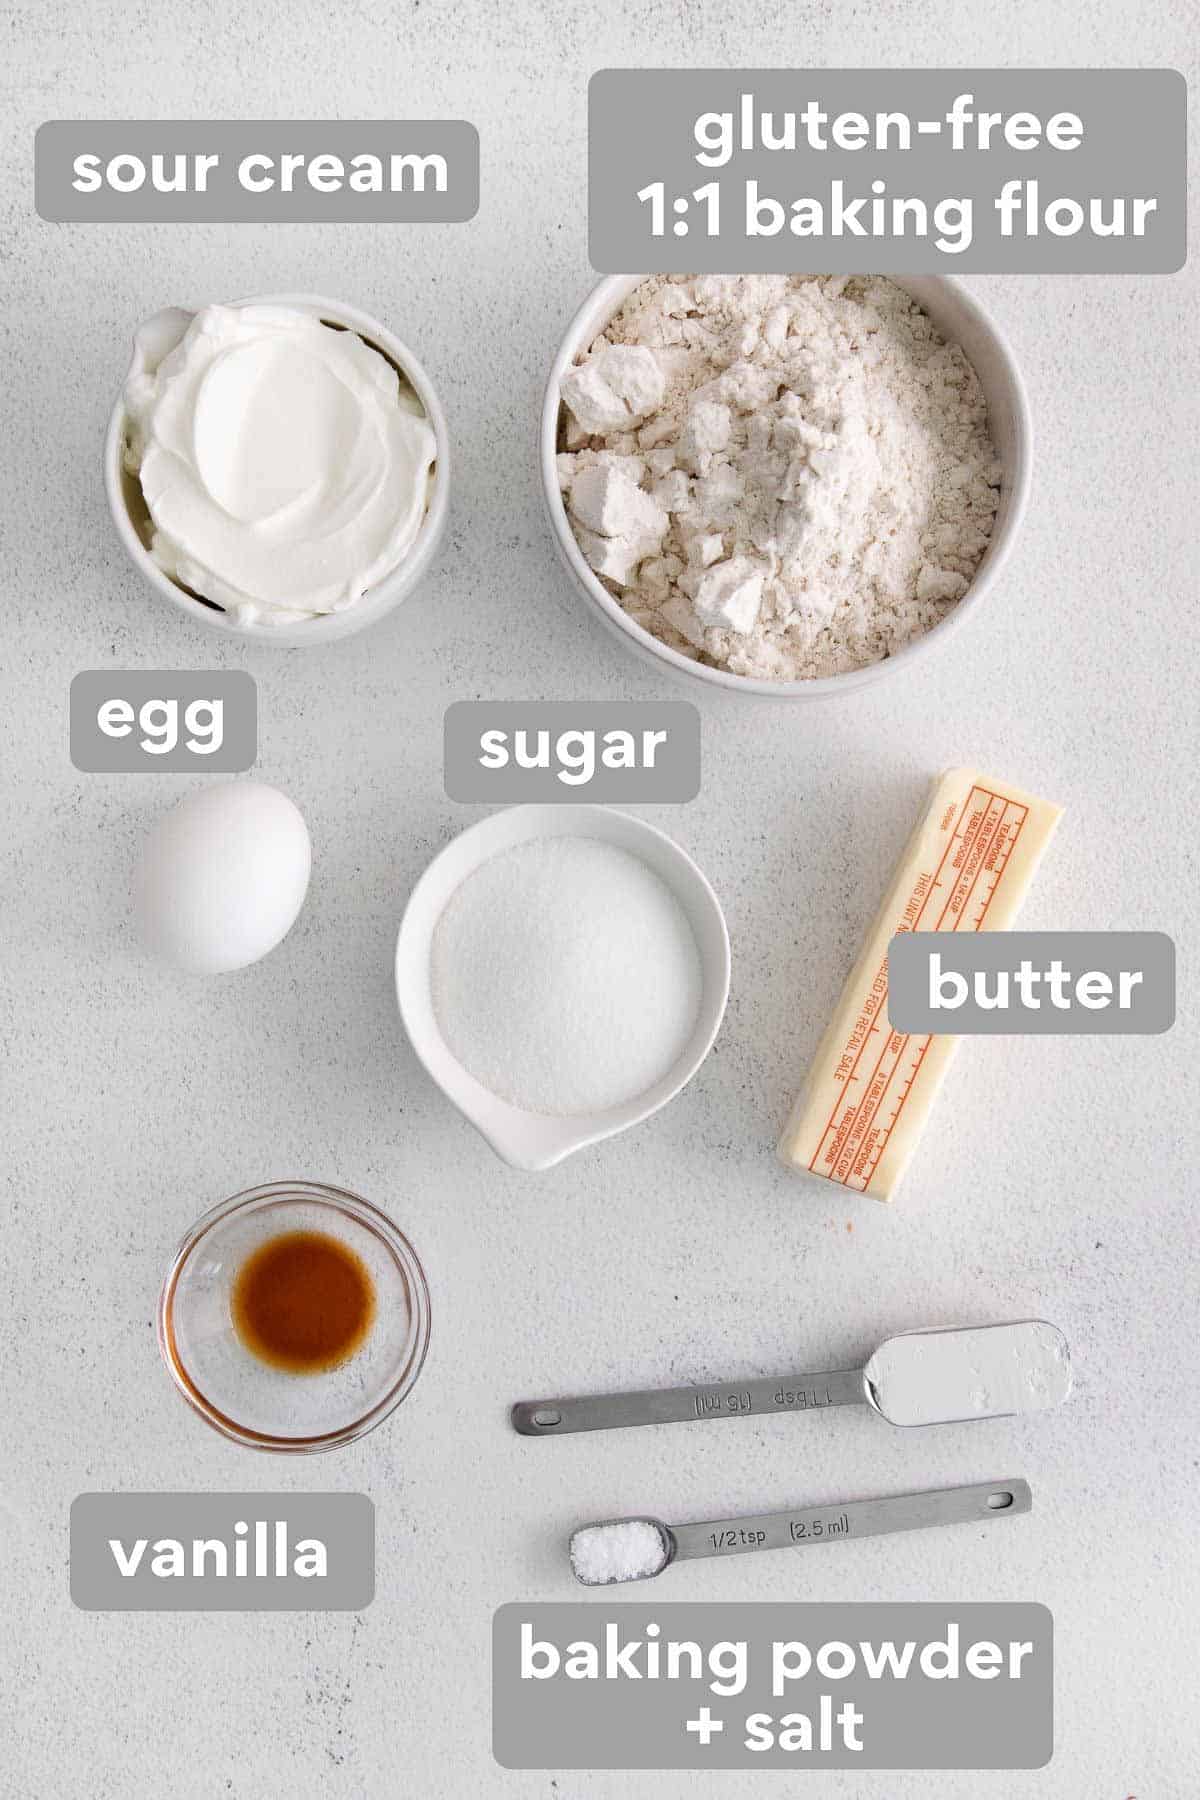 gluten-free scone ingredients on a countertop